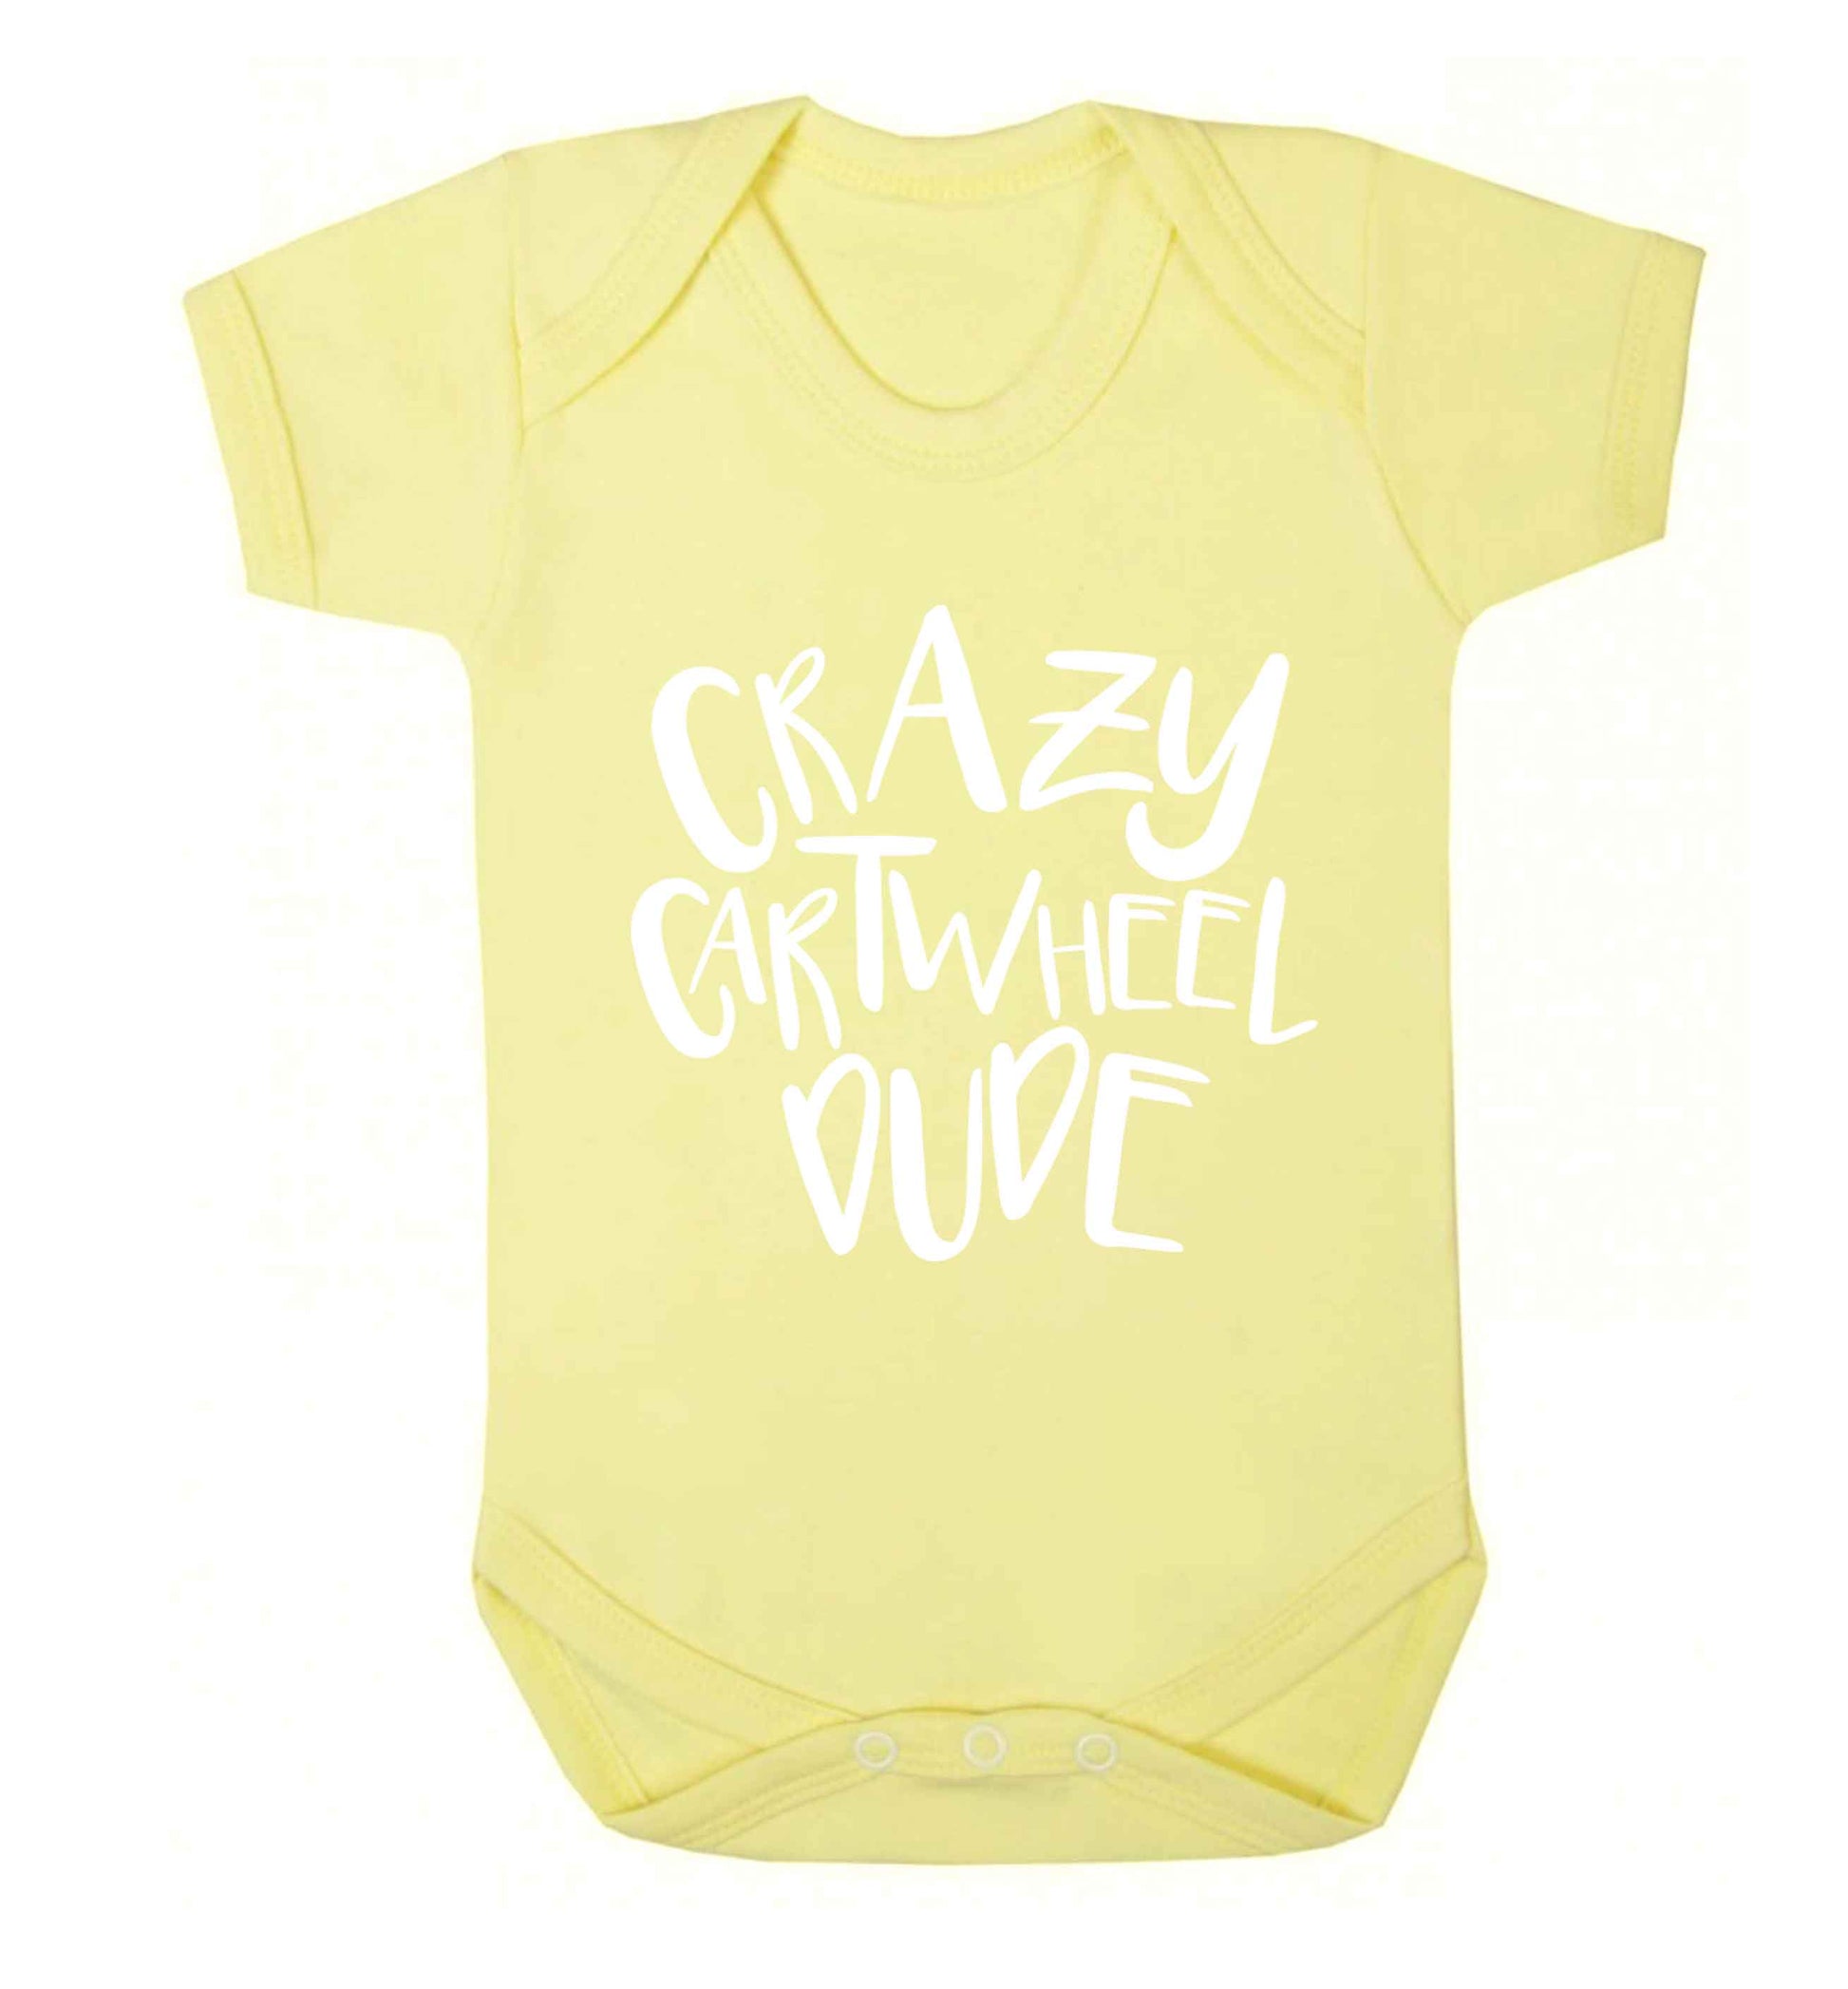 Crazy cartwheel dude Baby Vest pale yellow 18-24 months